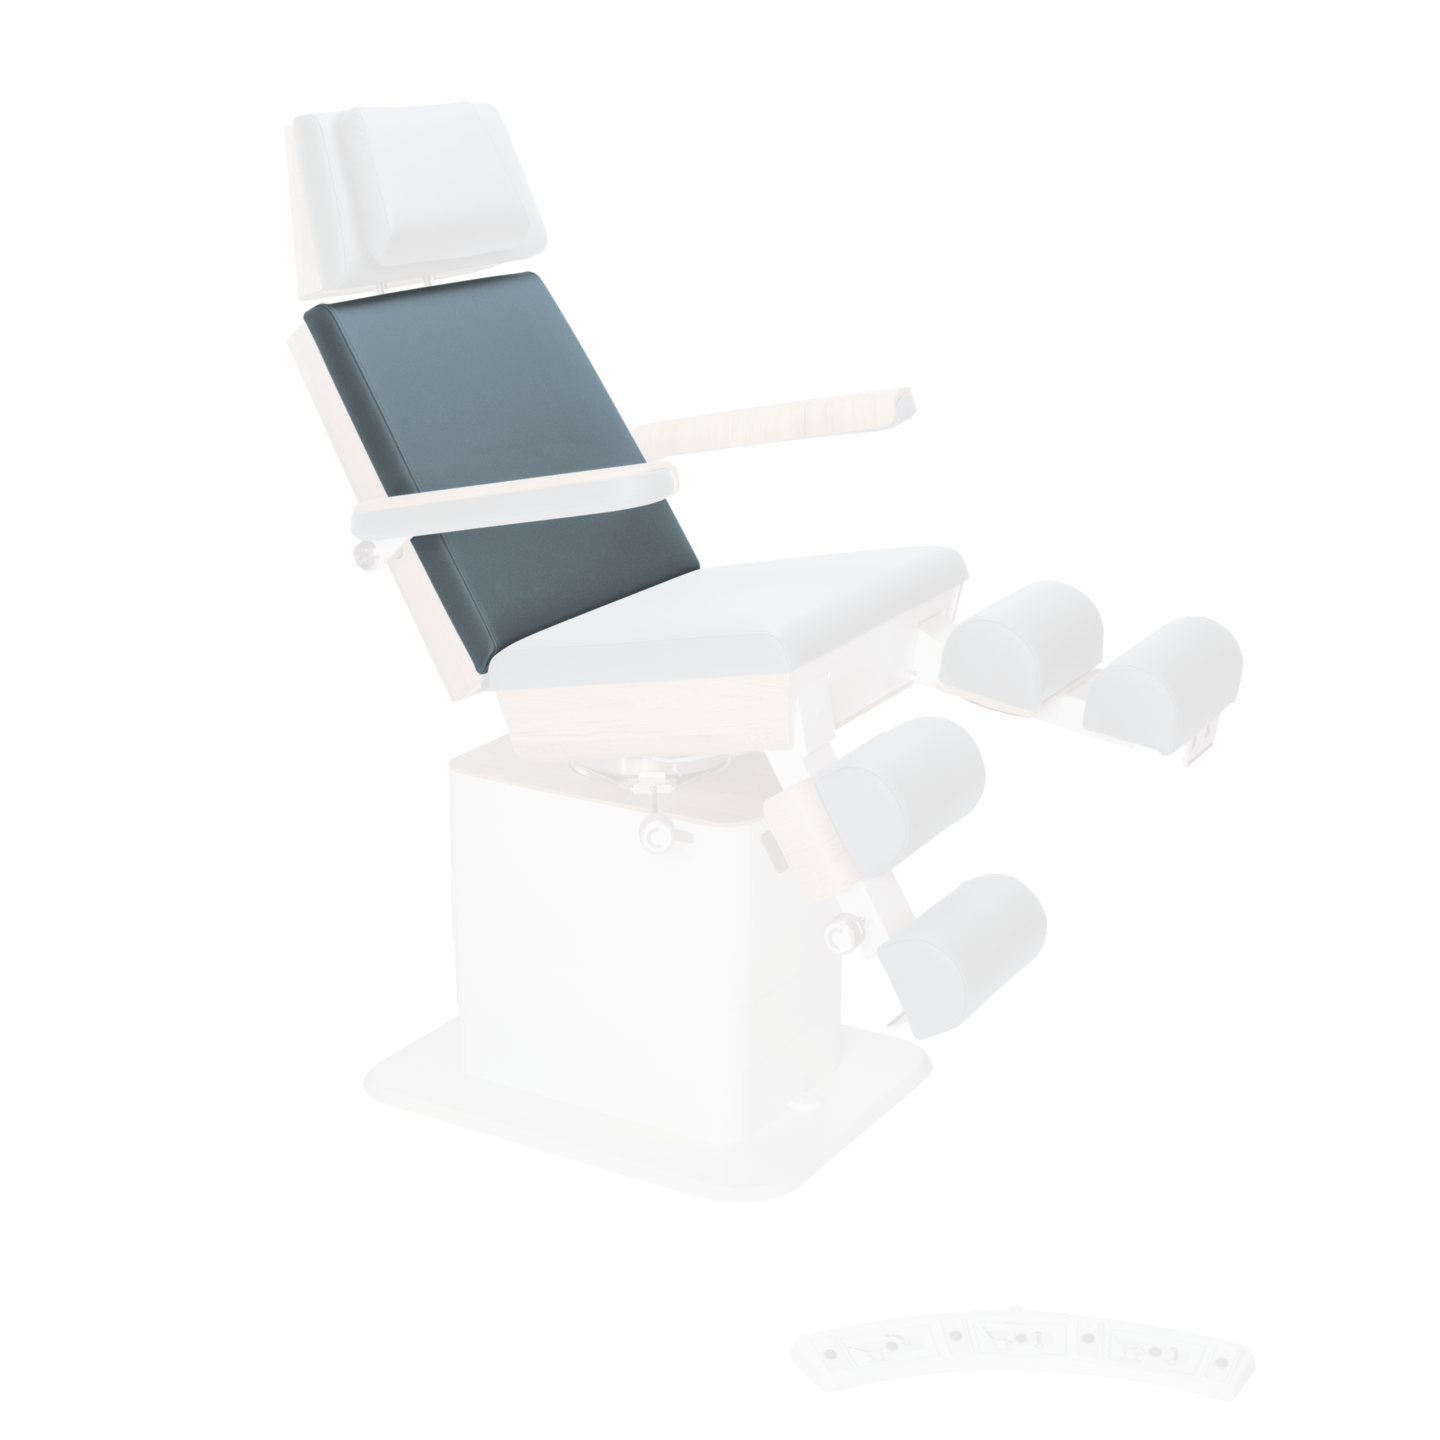 Backrest cushion for MOON Podiatry Treatment Chair/Couch, ocean